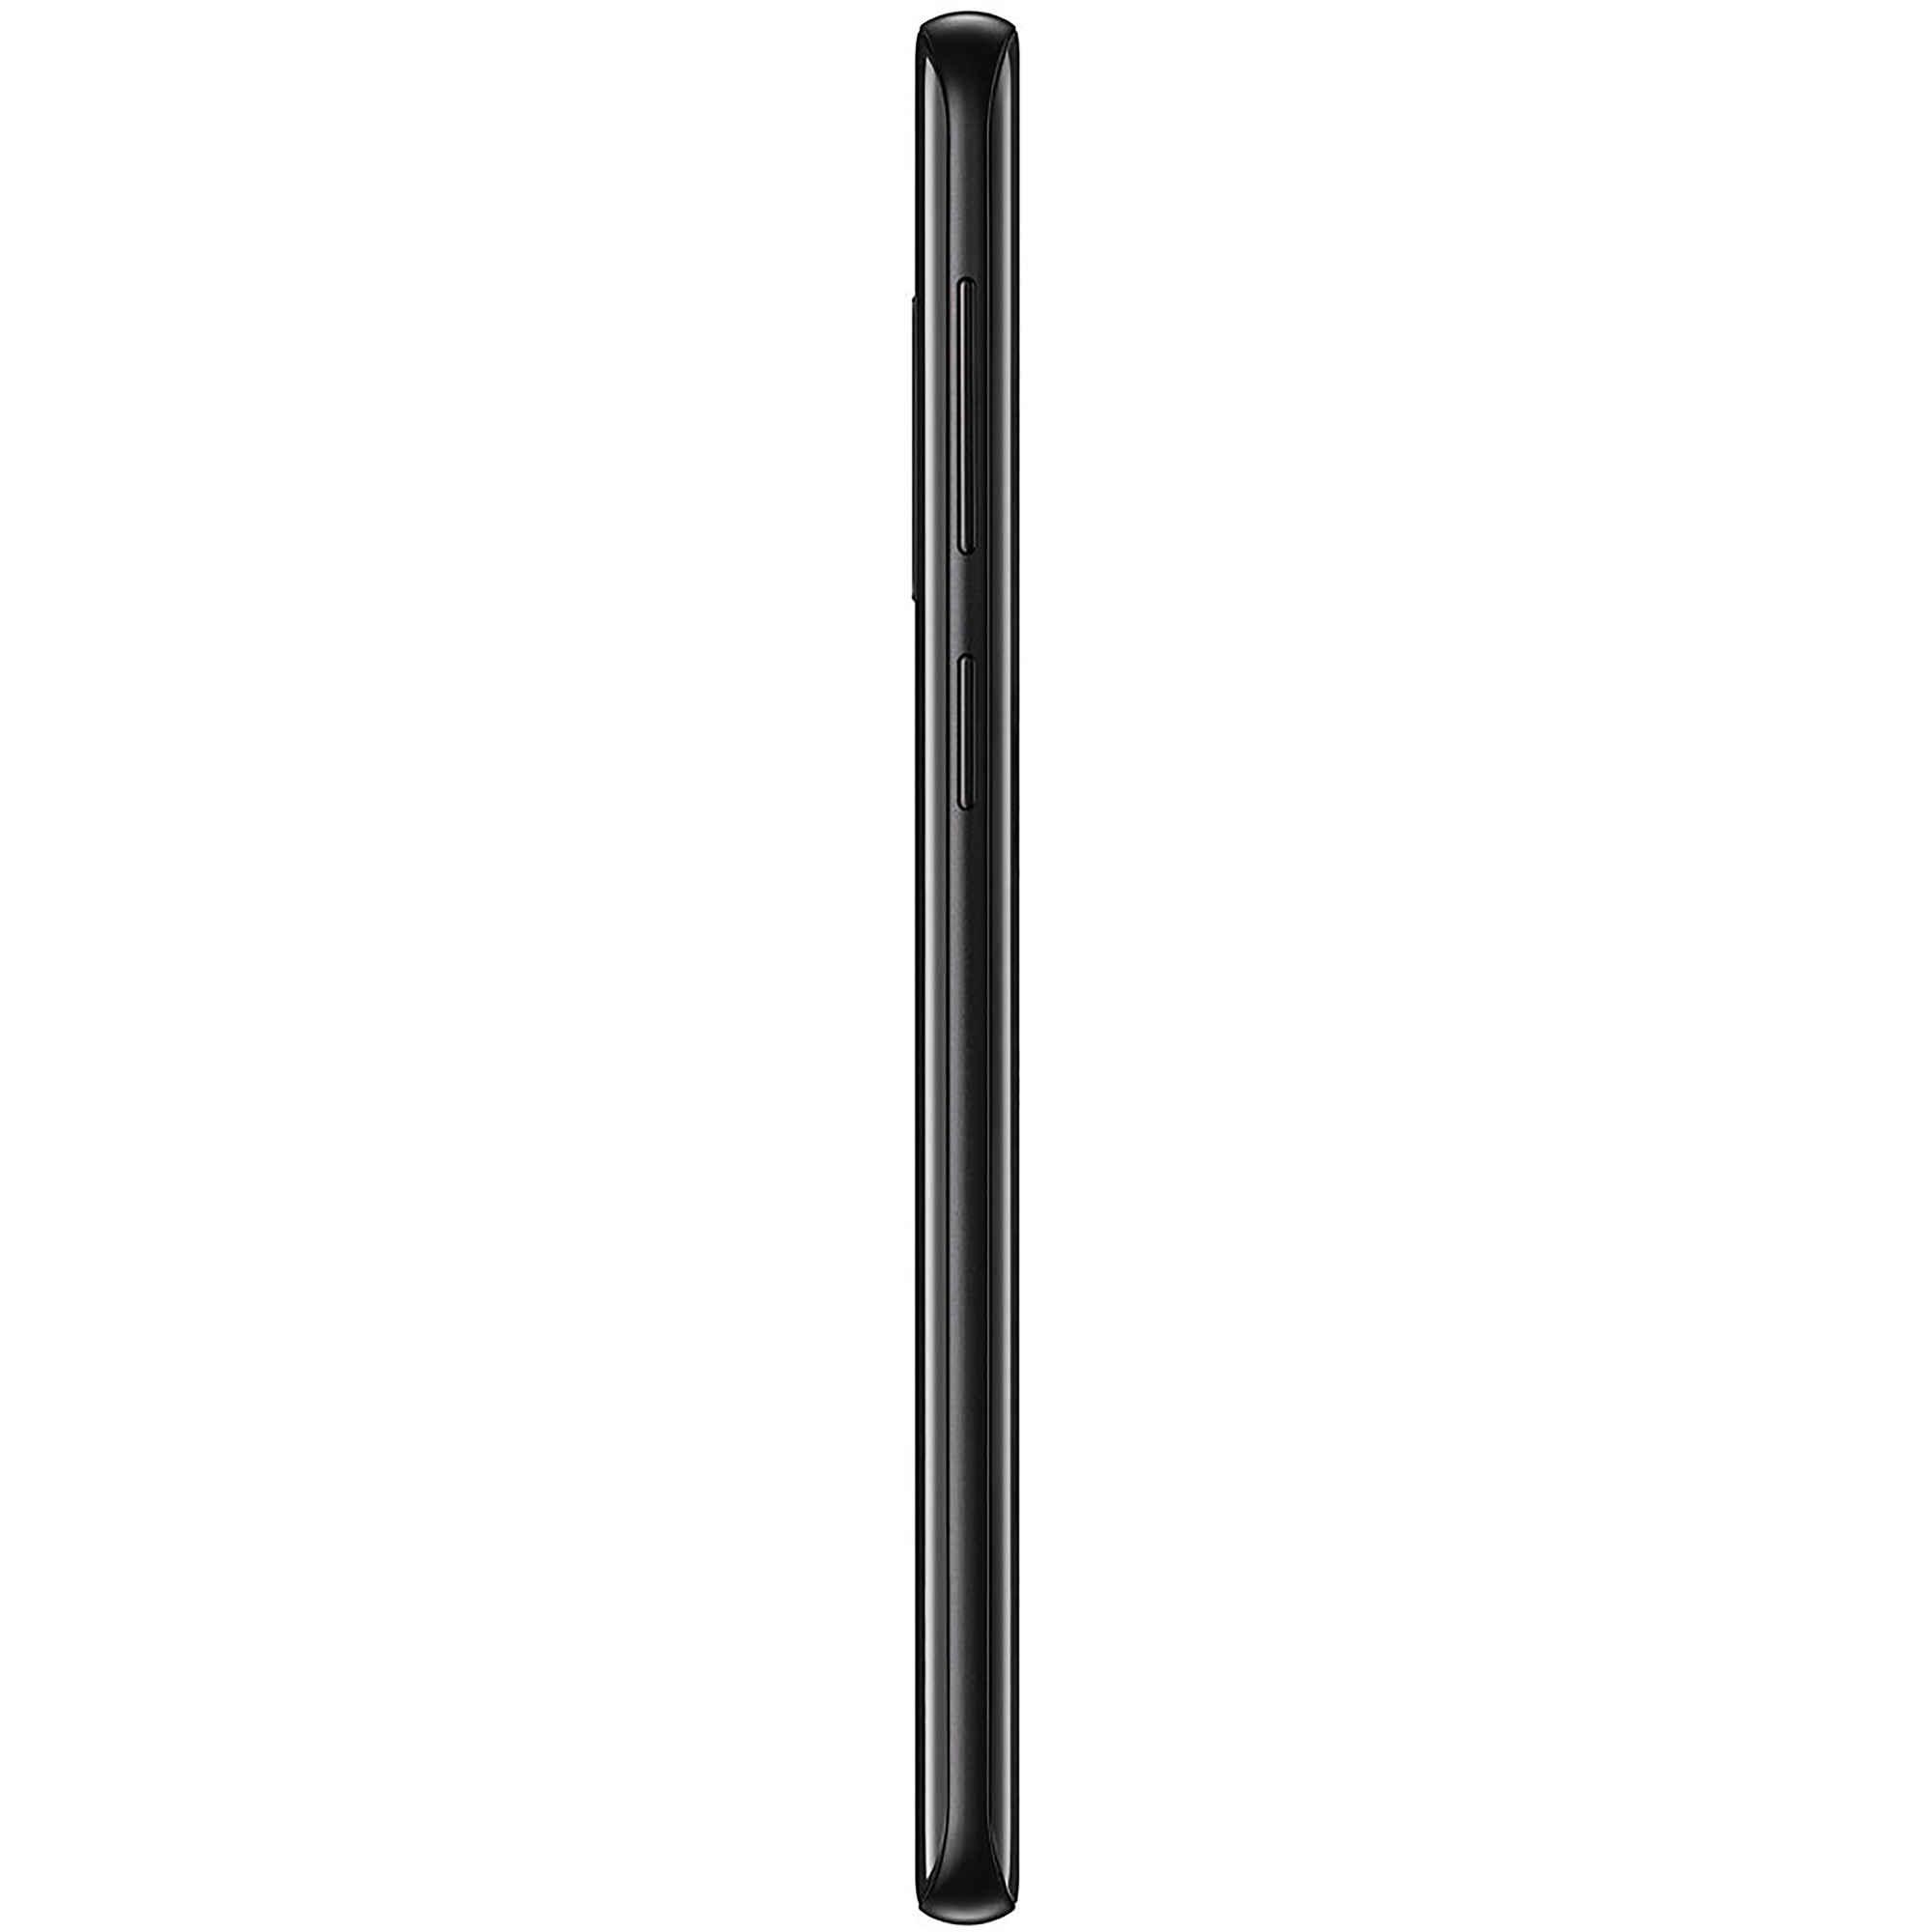 SAMSUNG Unlocked Galaxy S9, 64GB Black - Smartphone - image 2 of 4